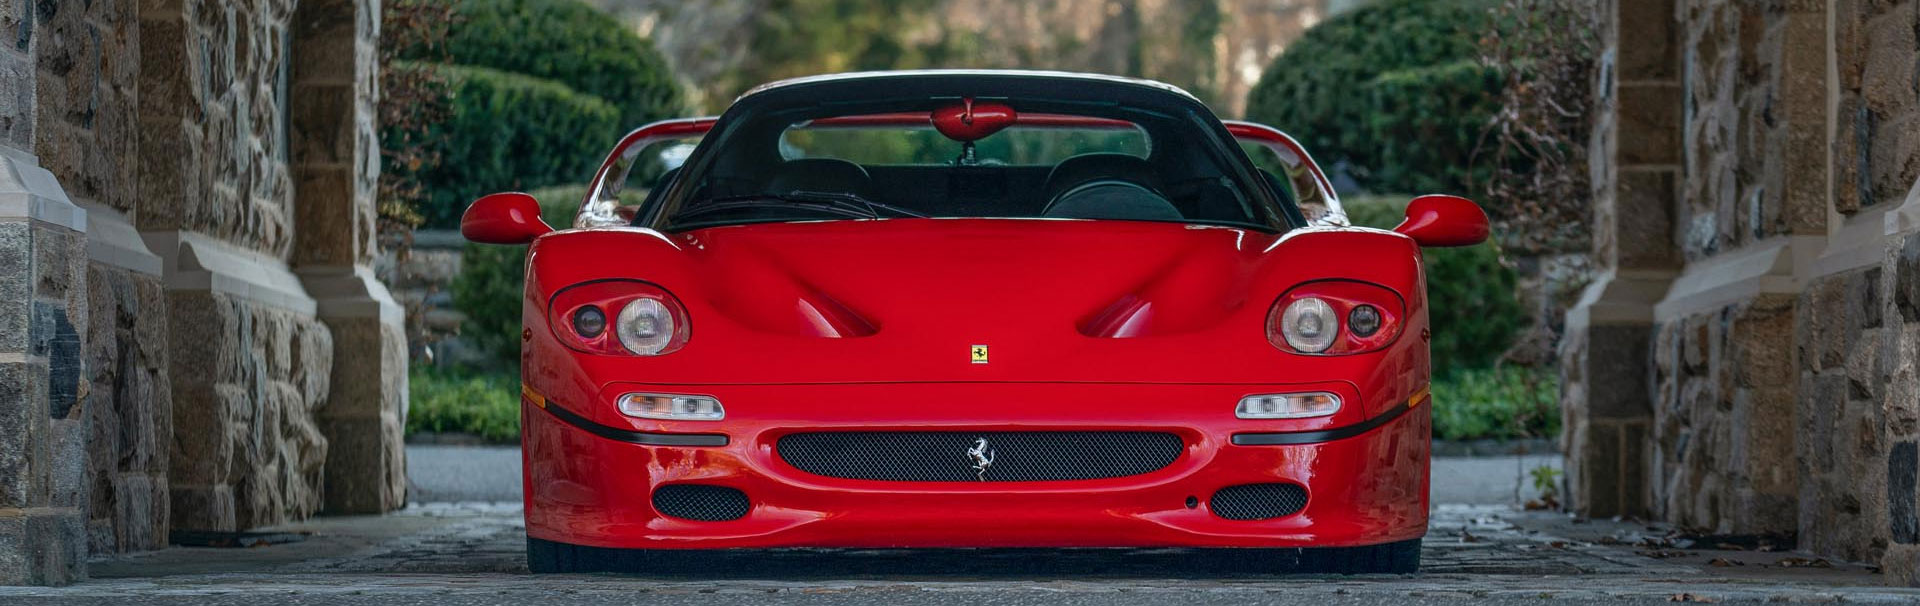 Ferrari F50 Prototipo - Immagine da Wordwide Auctioneers